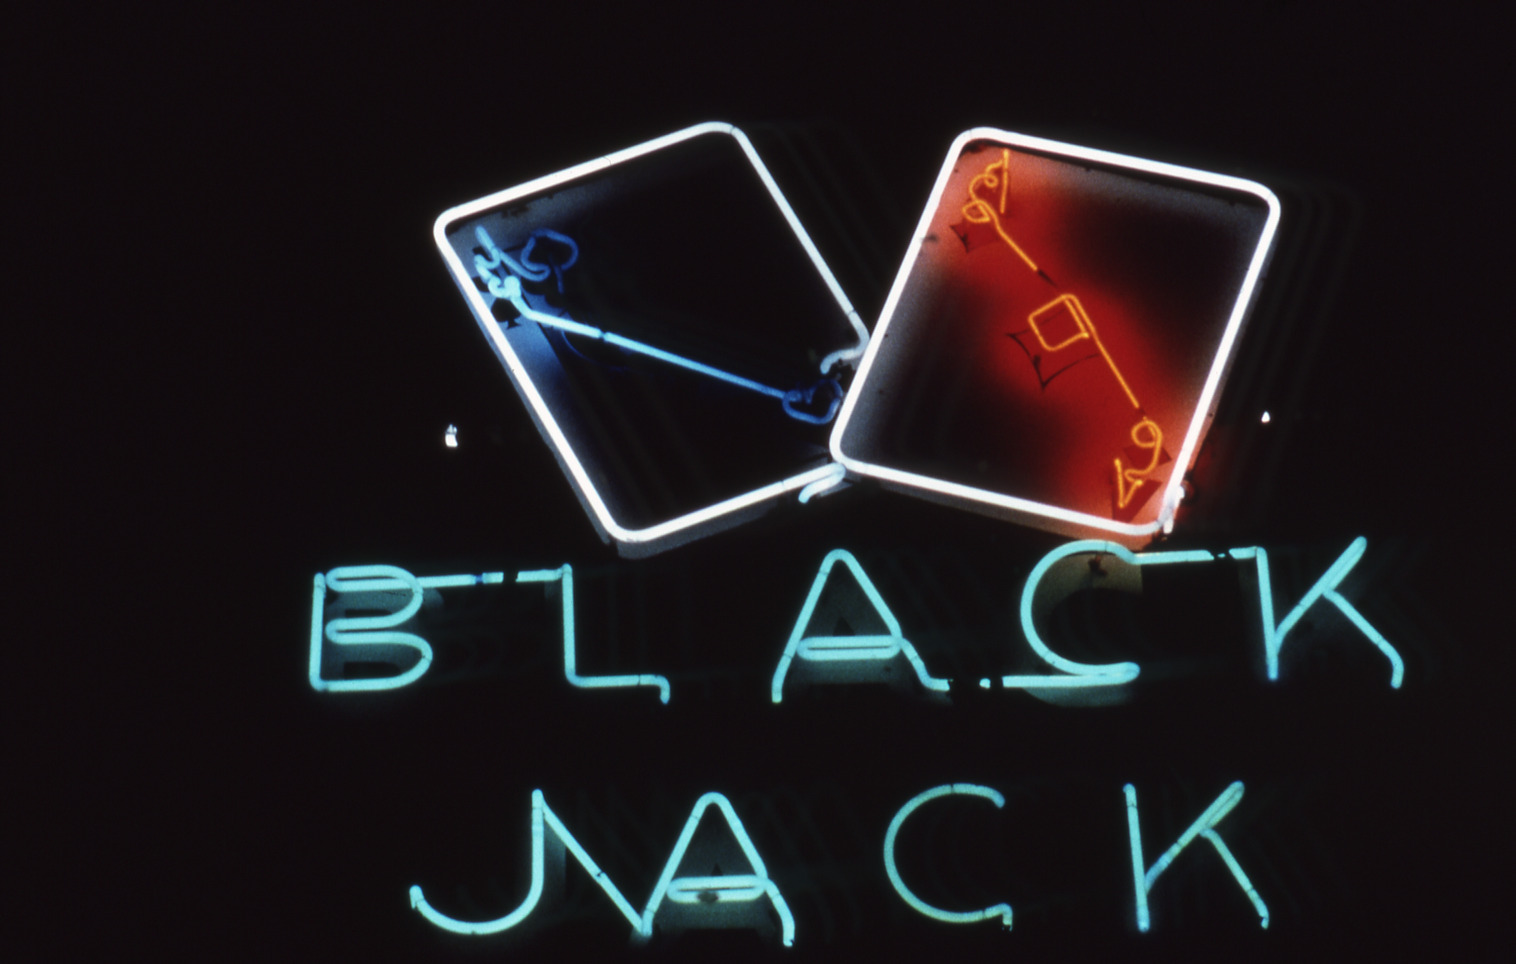 Black Jack sign, Las Vegas, Nevada: photographic print